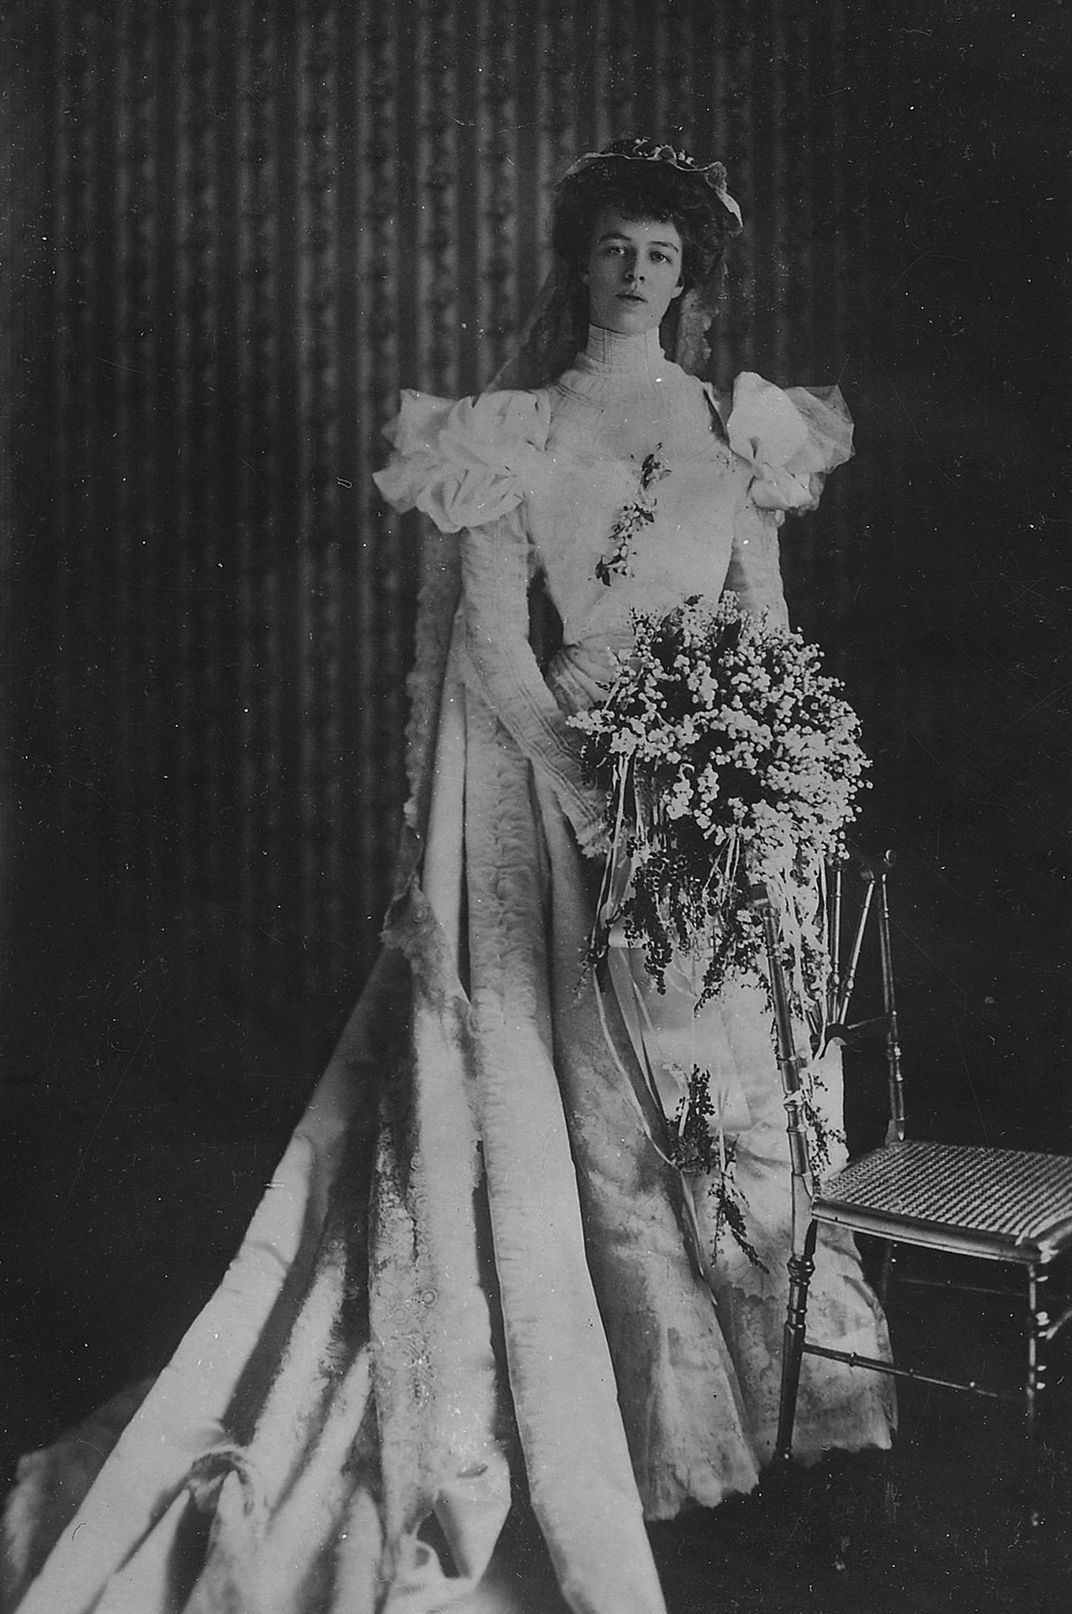 Eleanor wearing her wedding dress in 1905